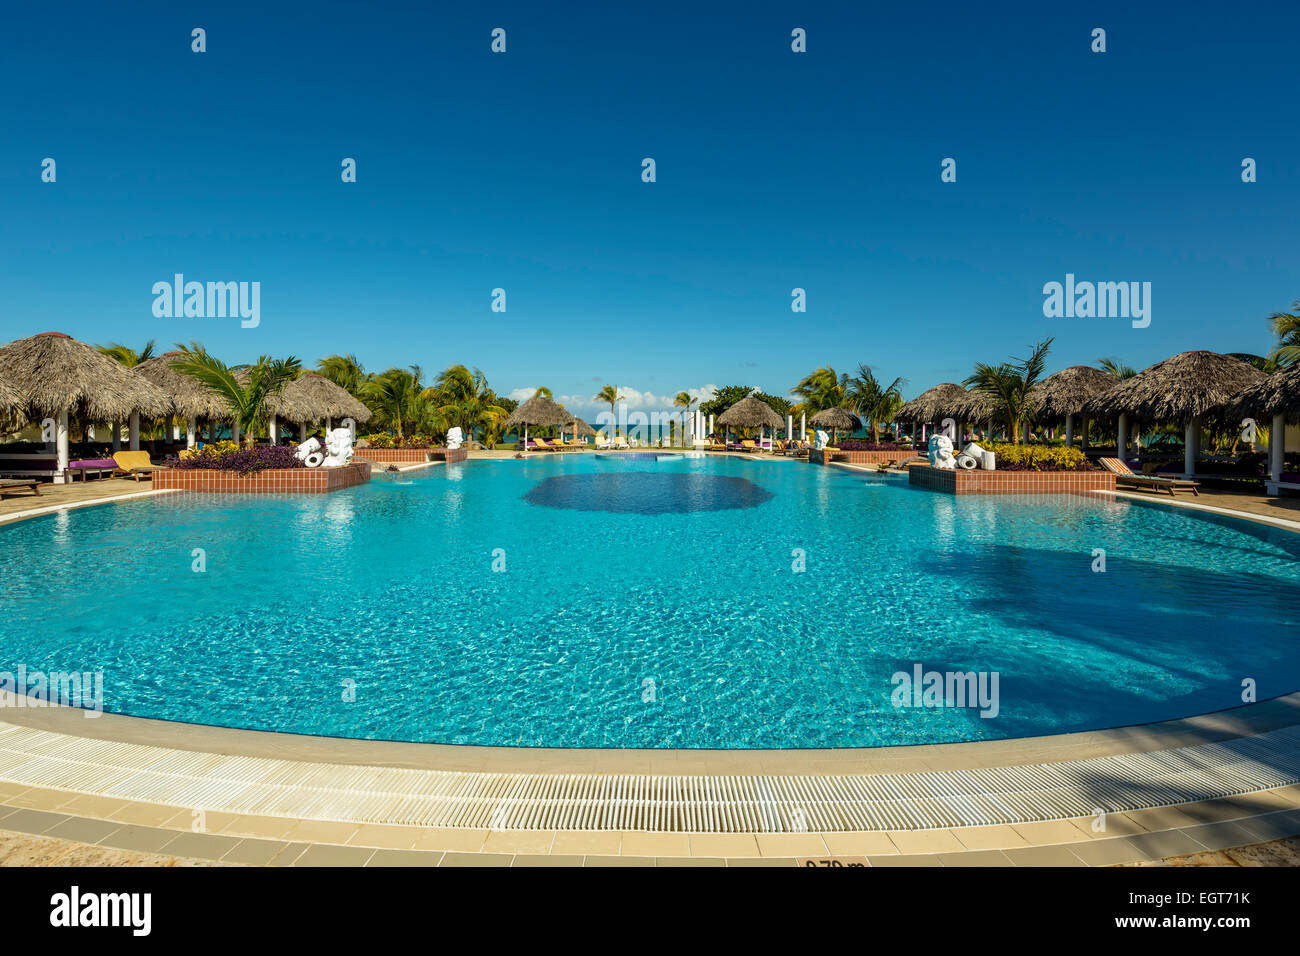 Piscina in un resort per vacanze, Varadero Matanzas, Cuba Foto Stock